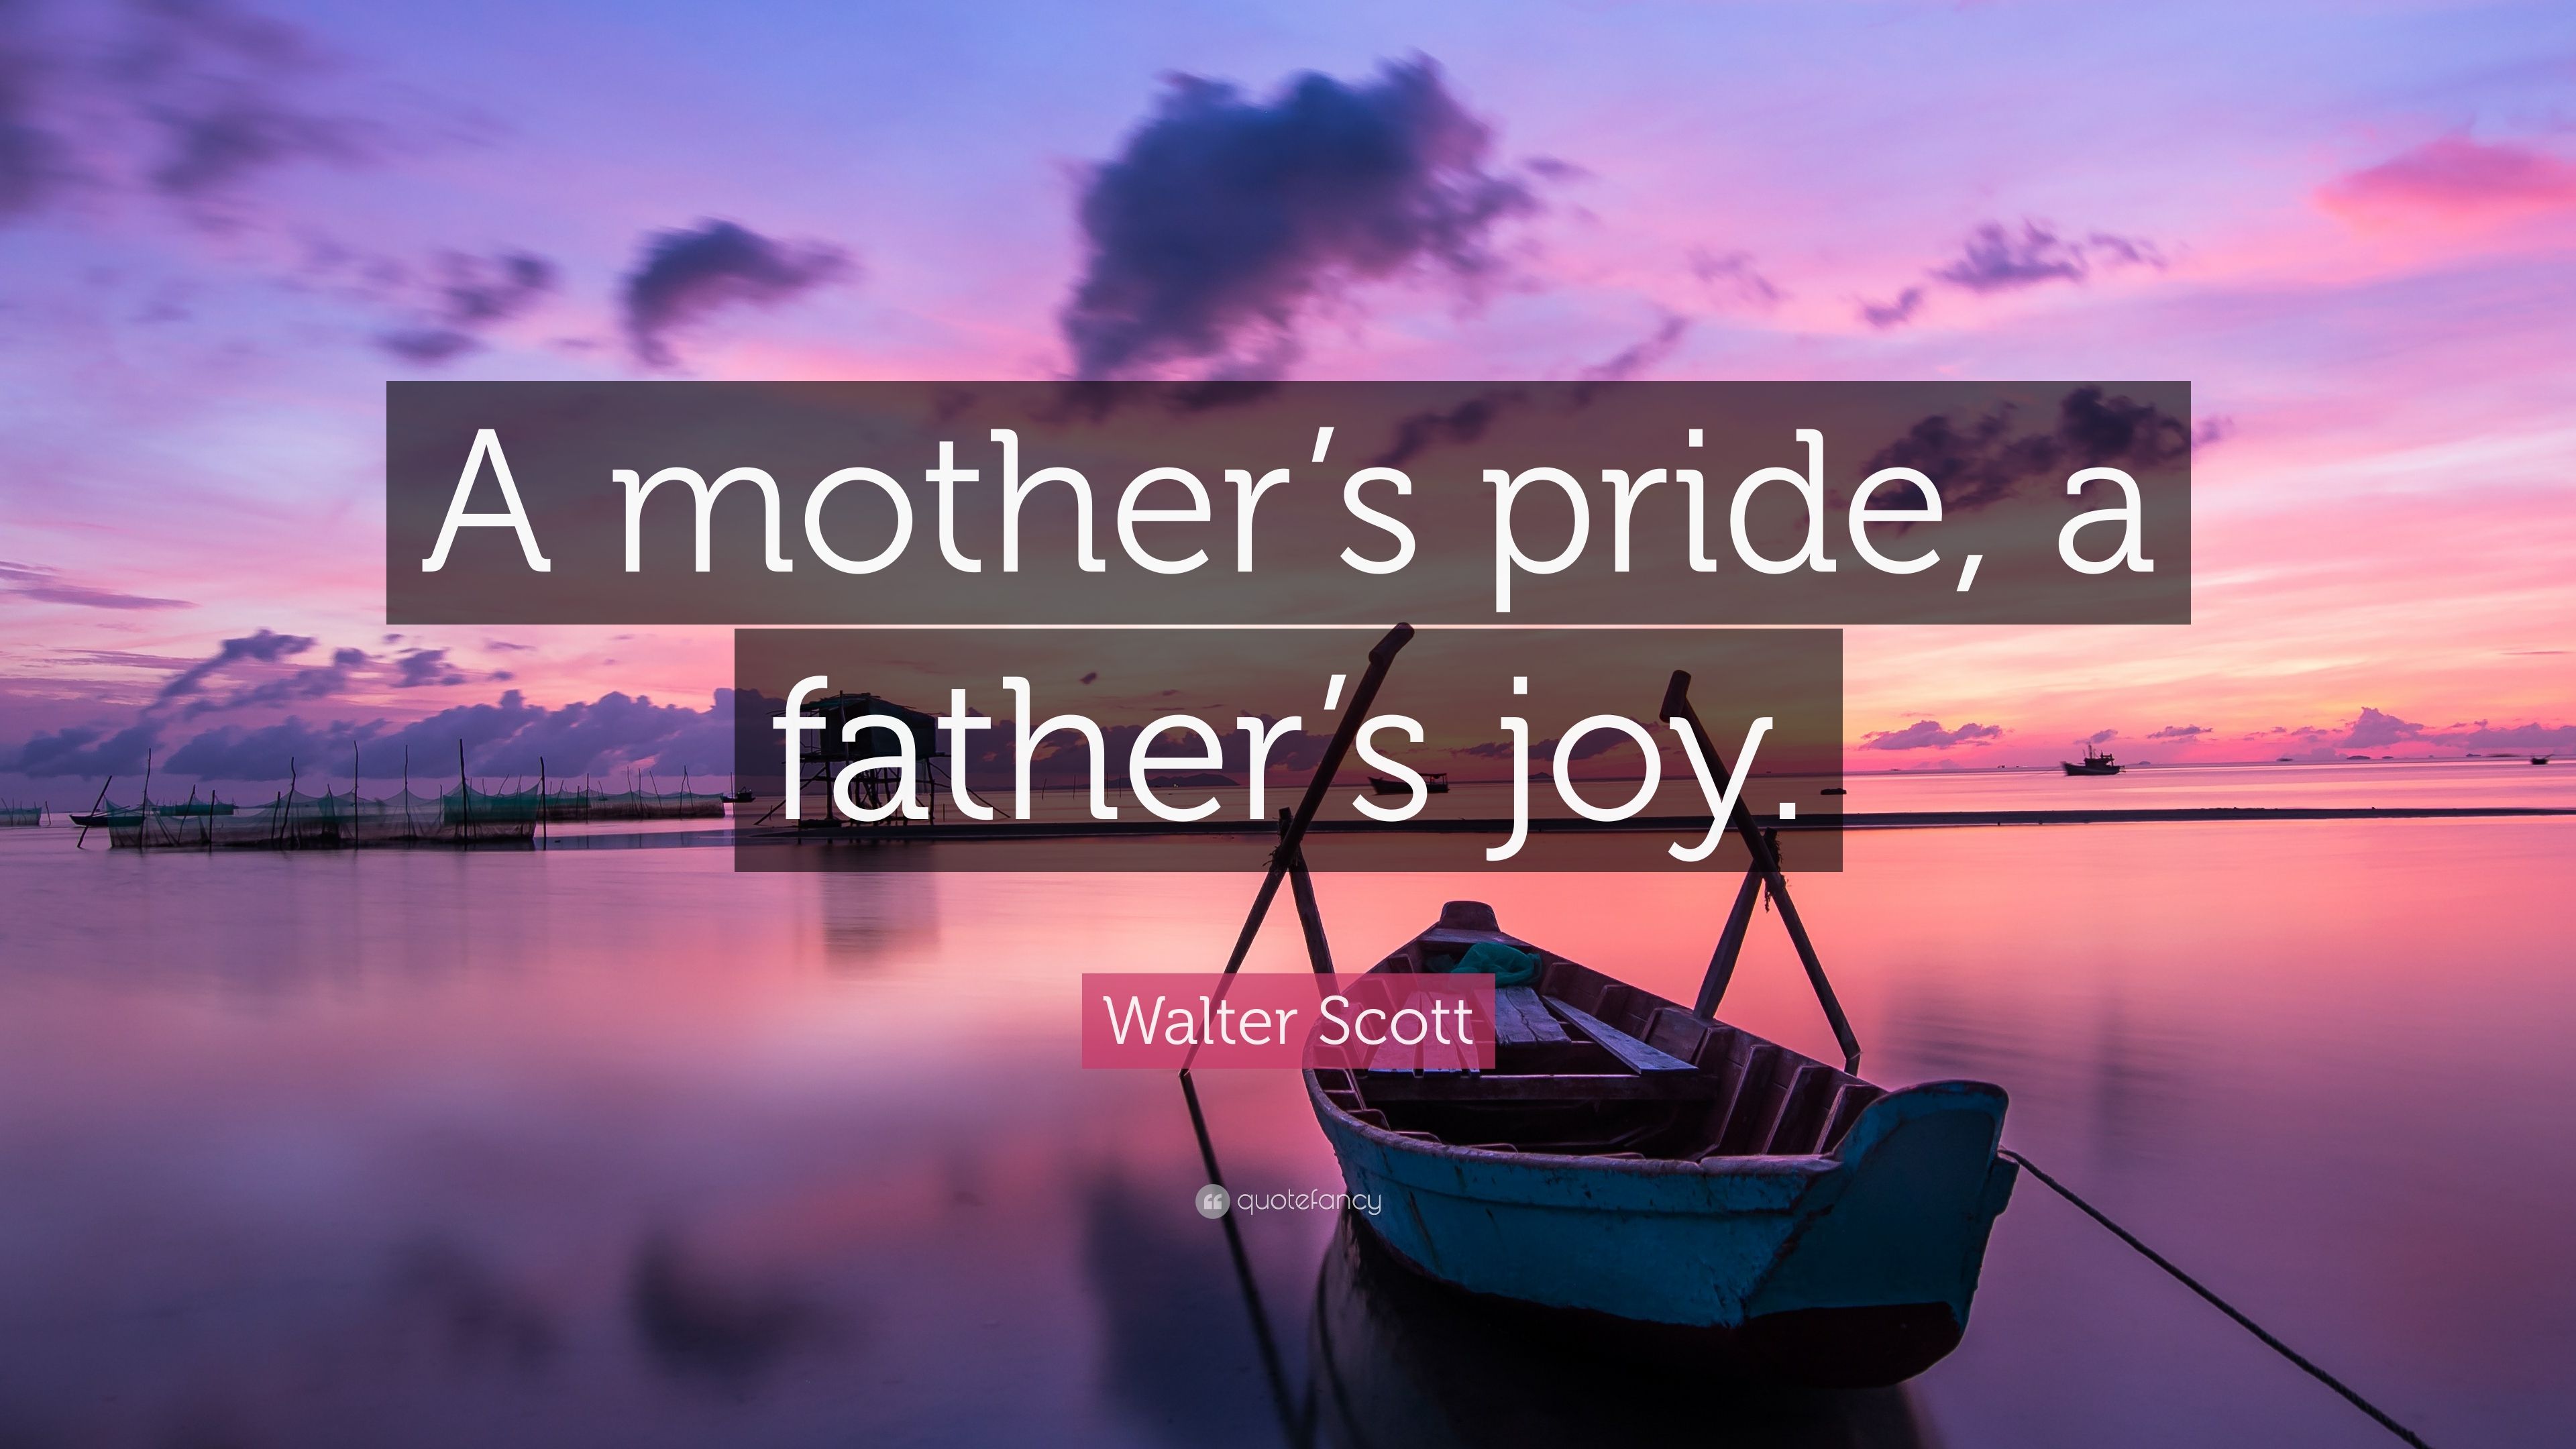 Walter Scott Quote: “A mother's pride .quotefancy.com